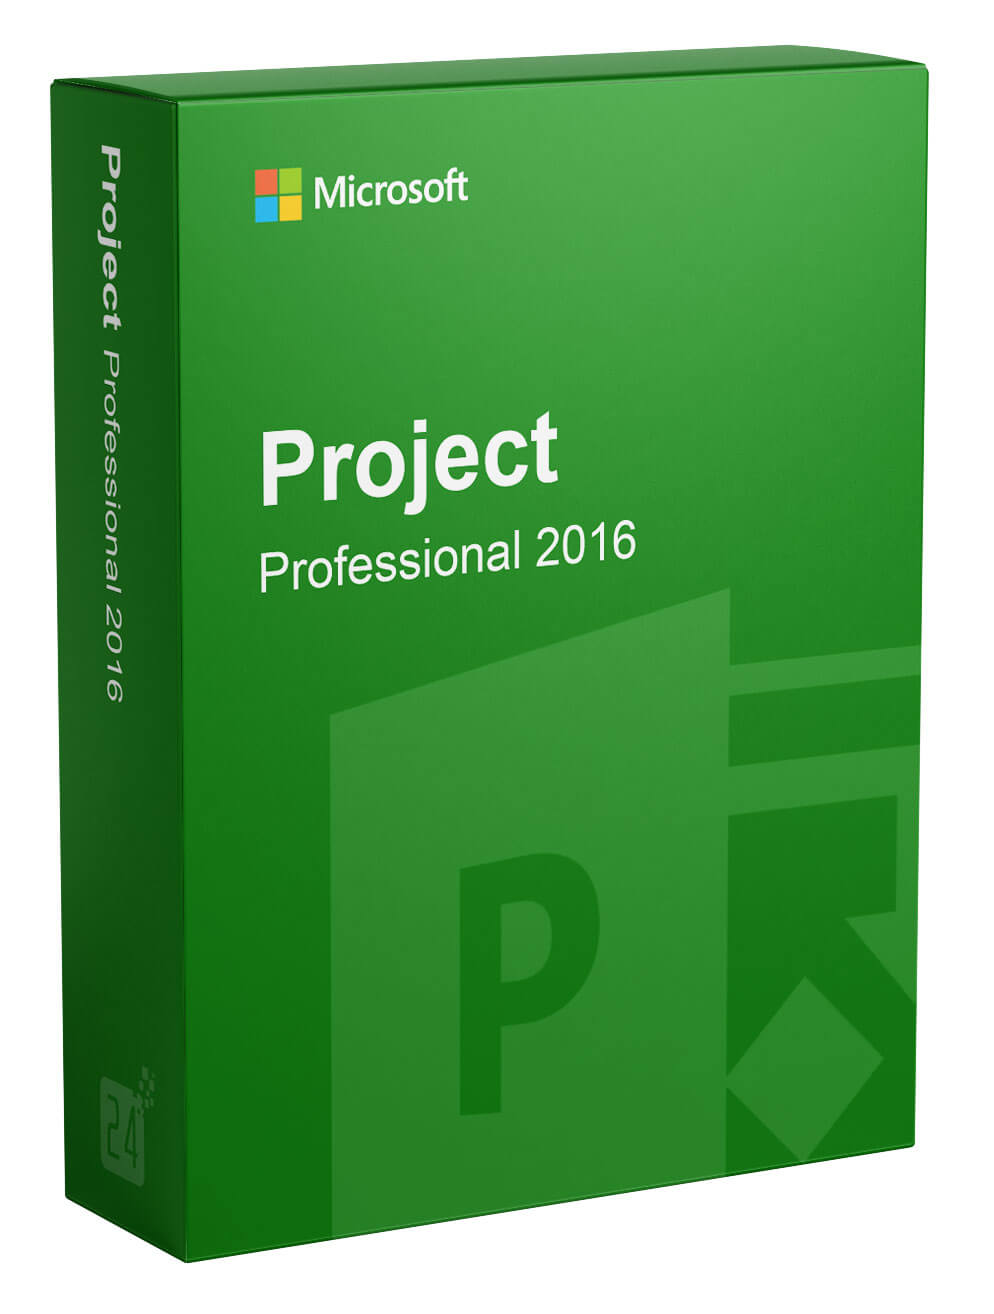 Microsoft Project 2016 Buy Online Cheap I Blitzhandel24 Gmbh 8730